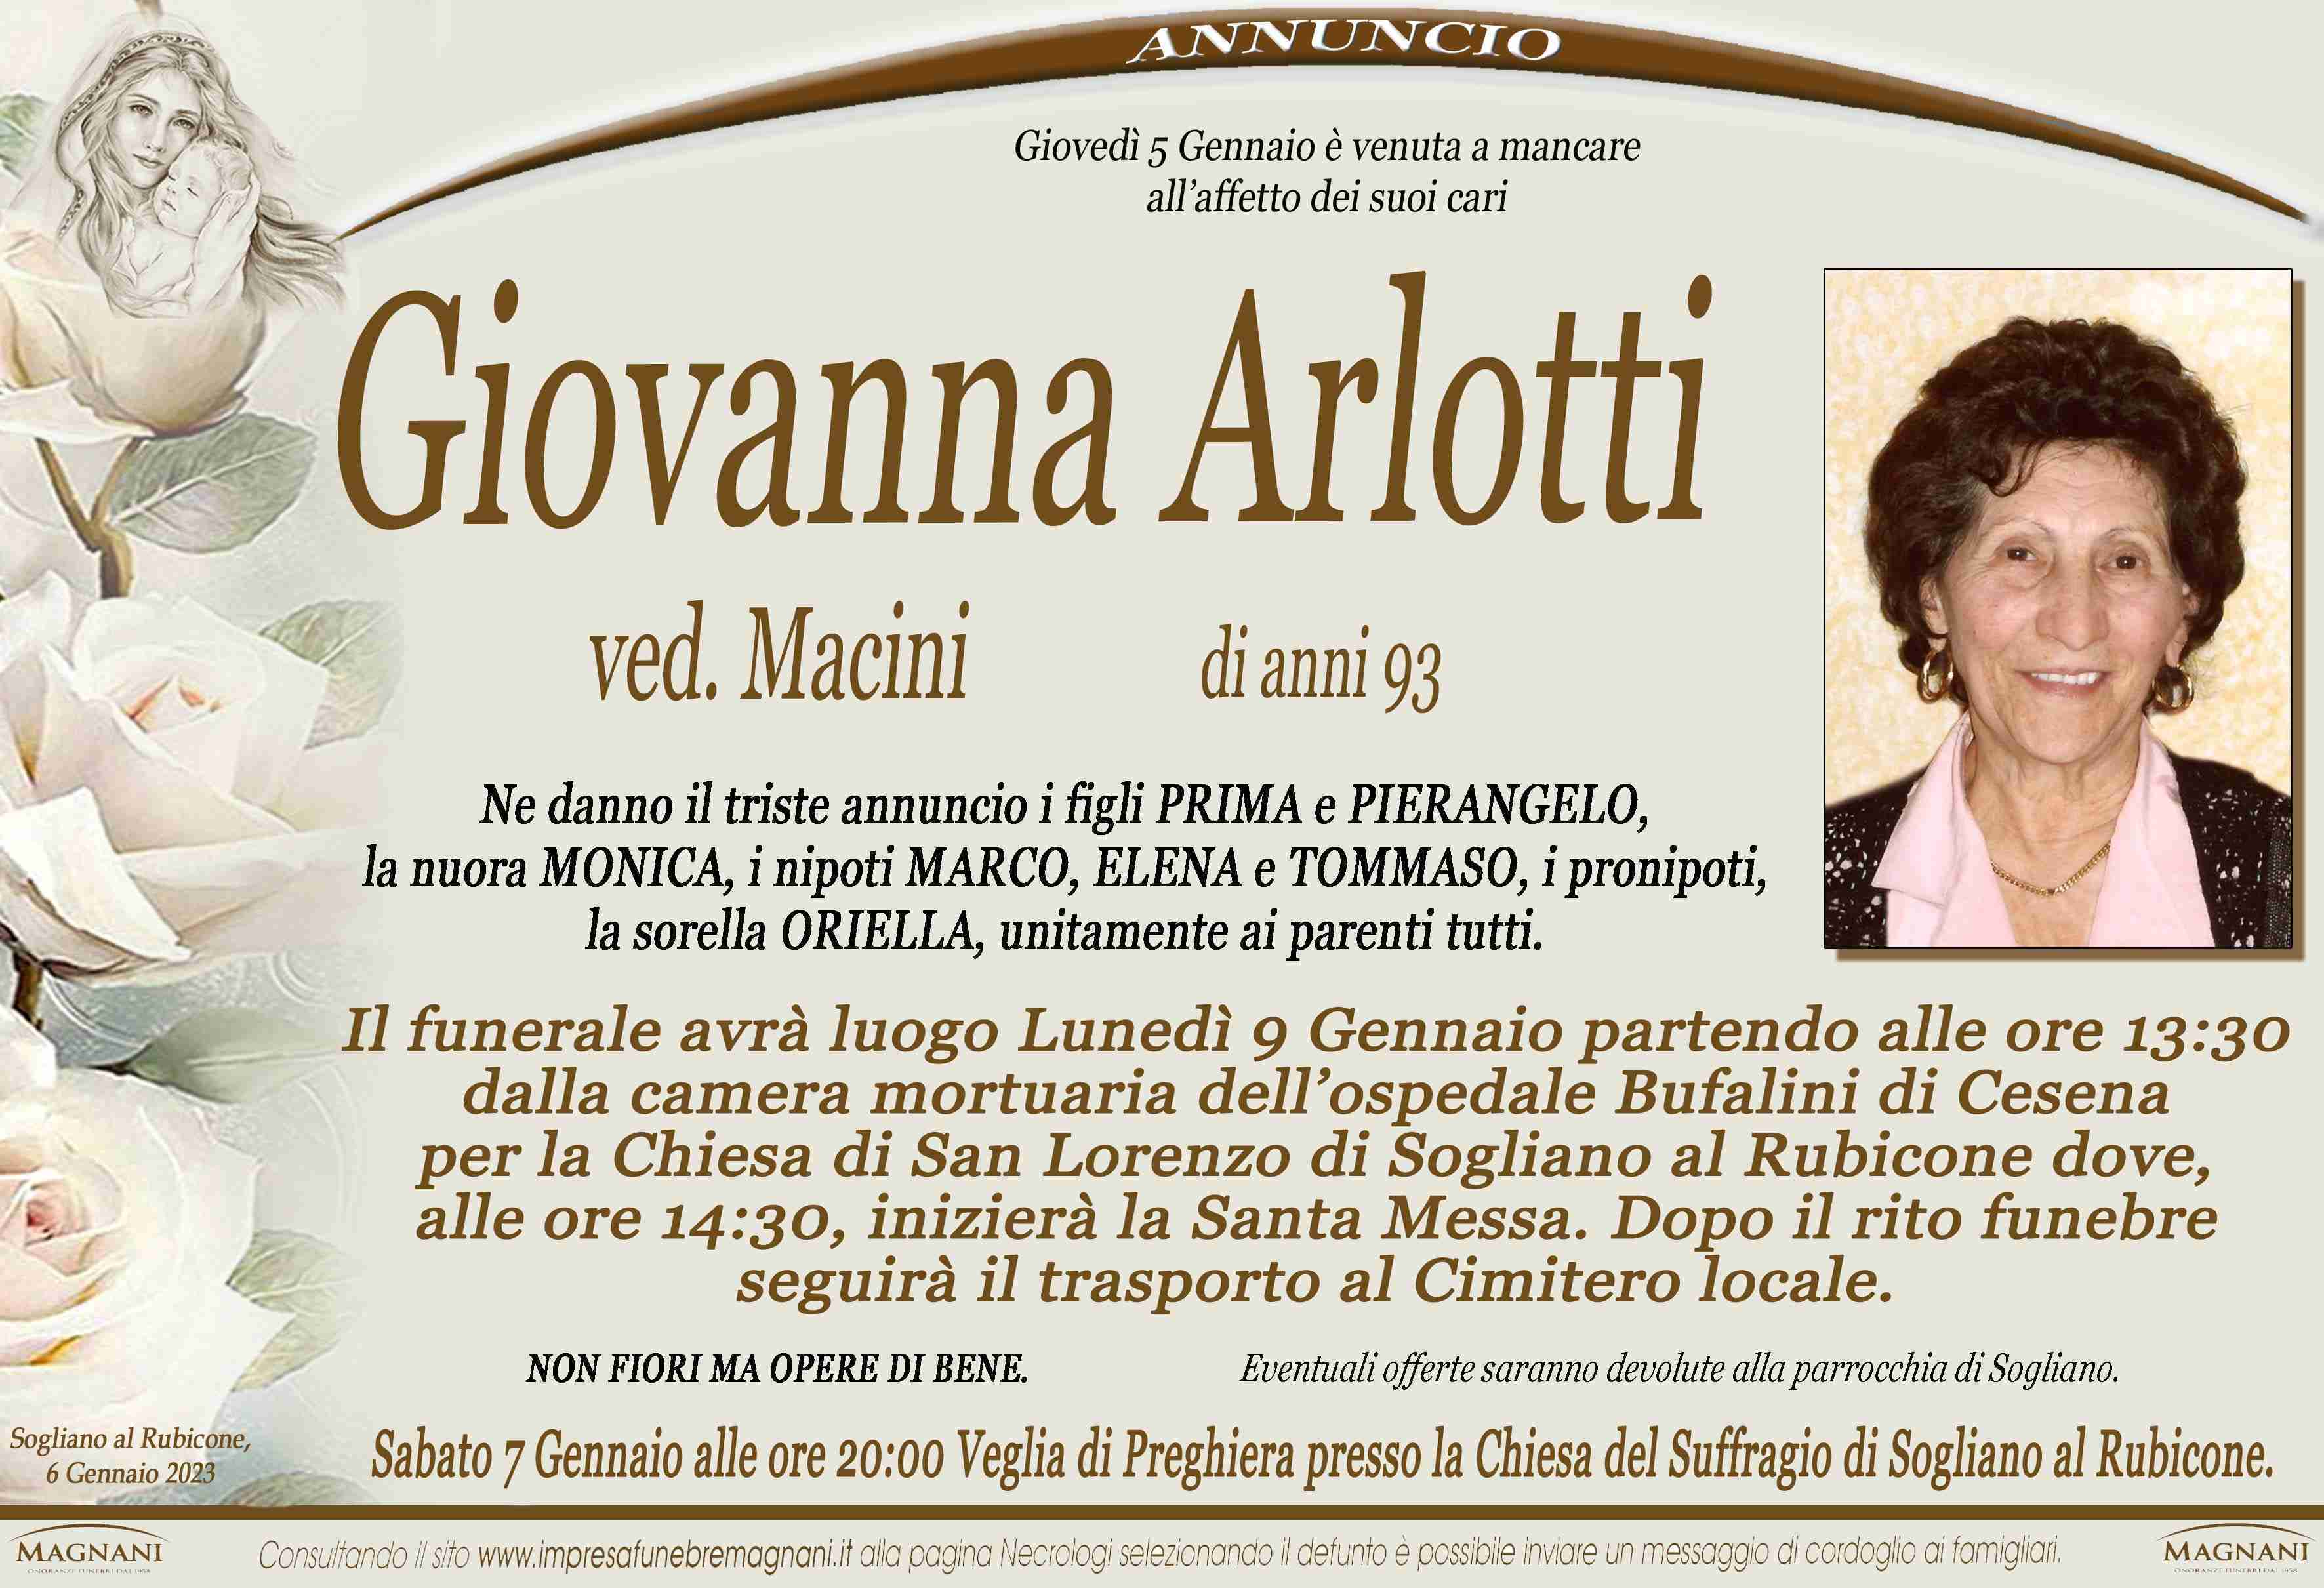 Giovanna Arlotti